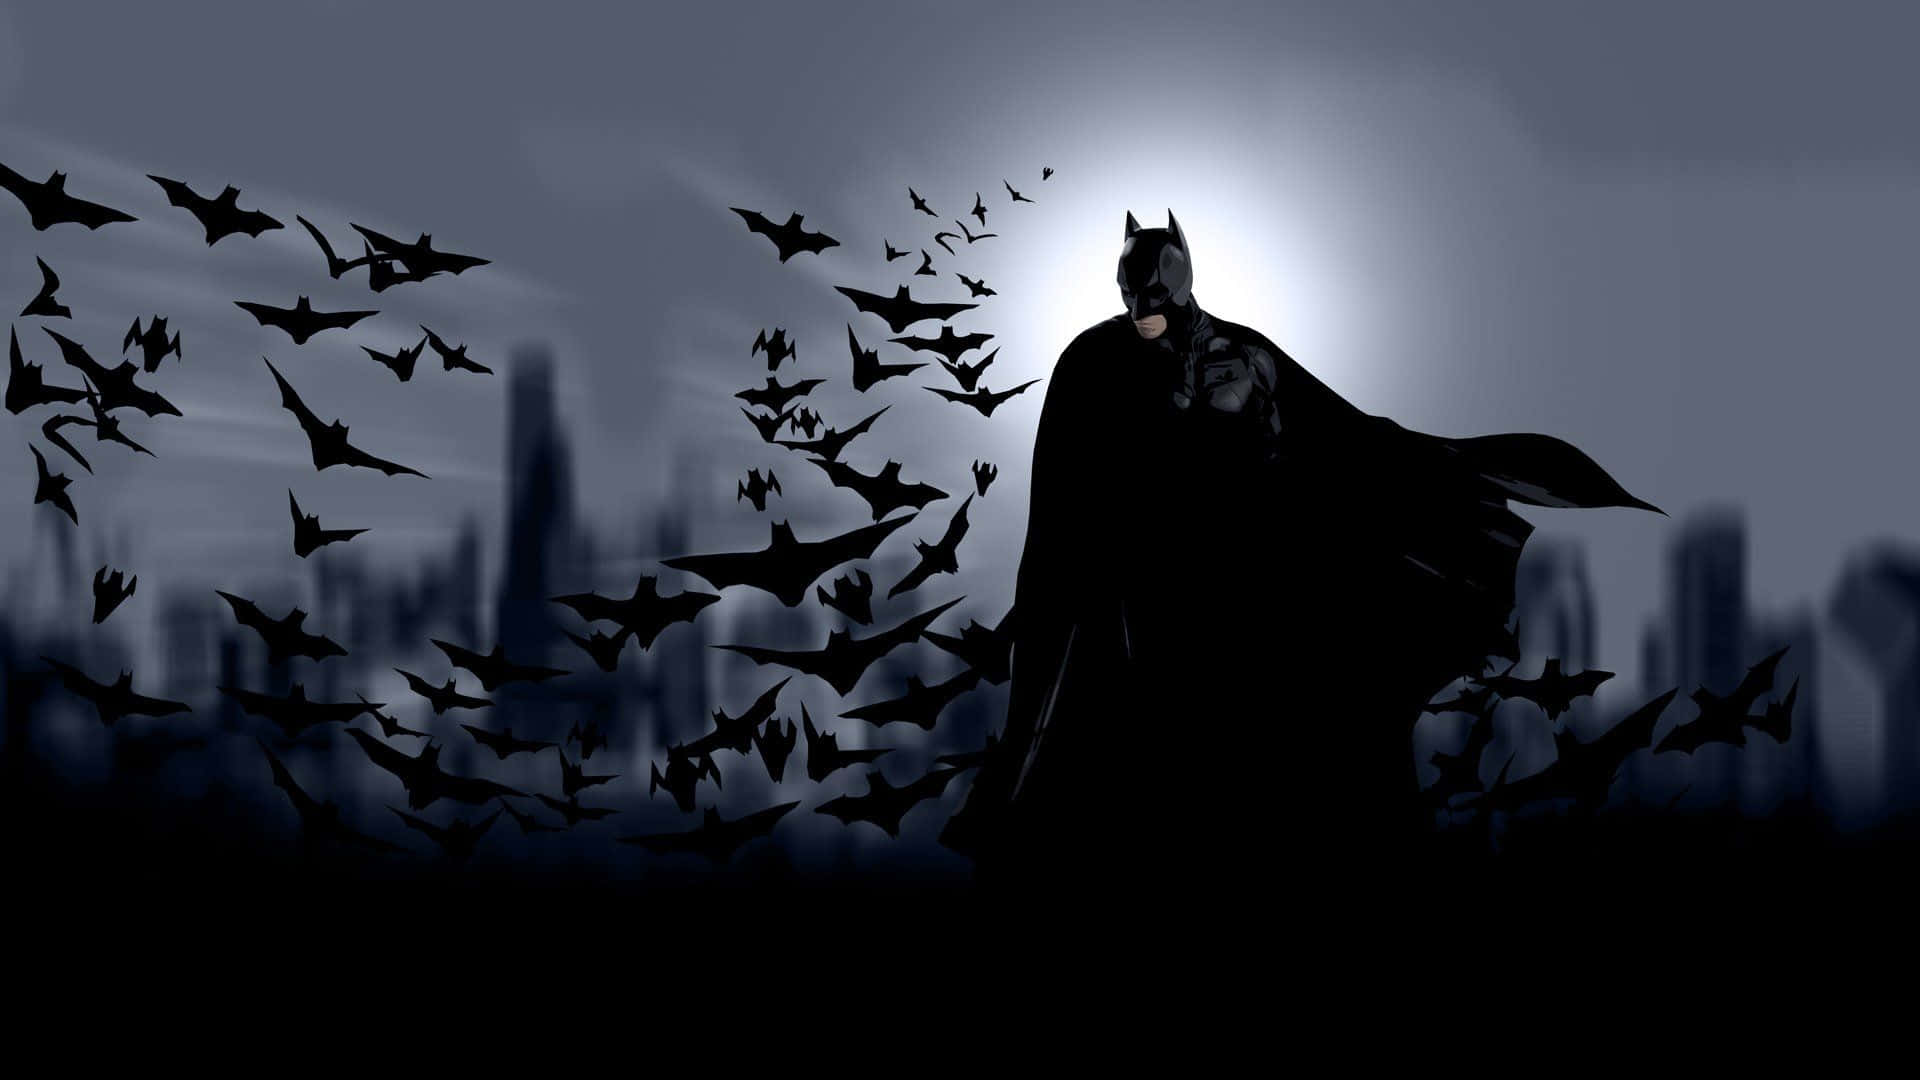 Batman Aesthetic Silhouette With Bats Wallpaper